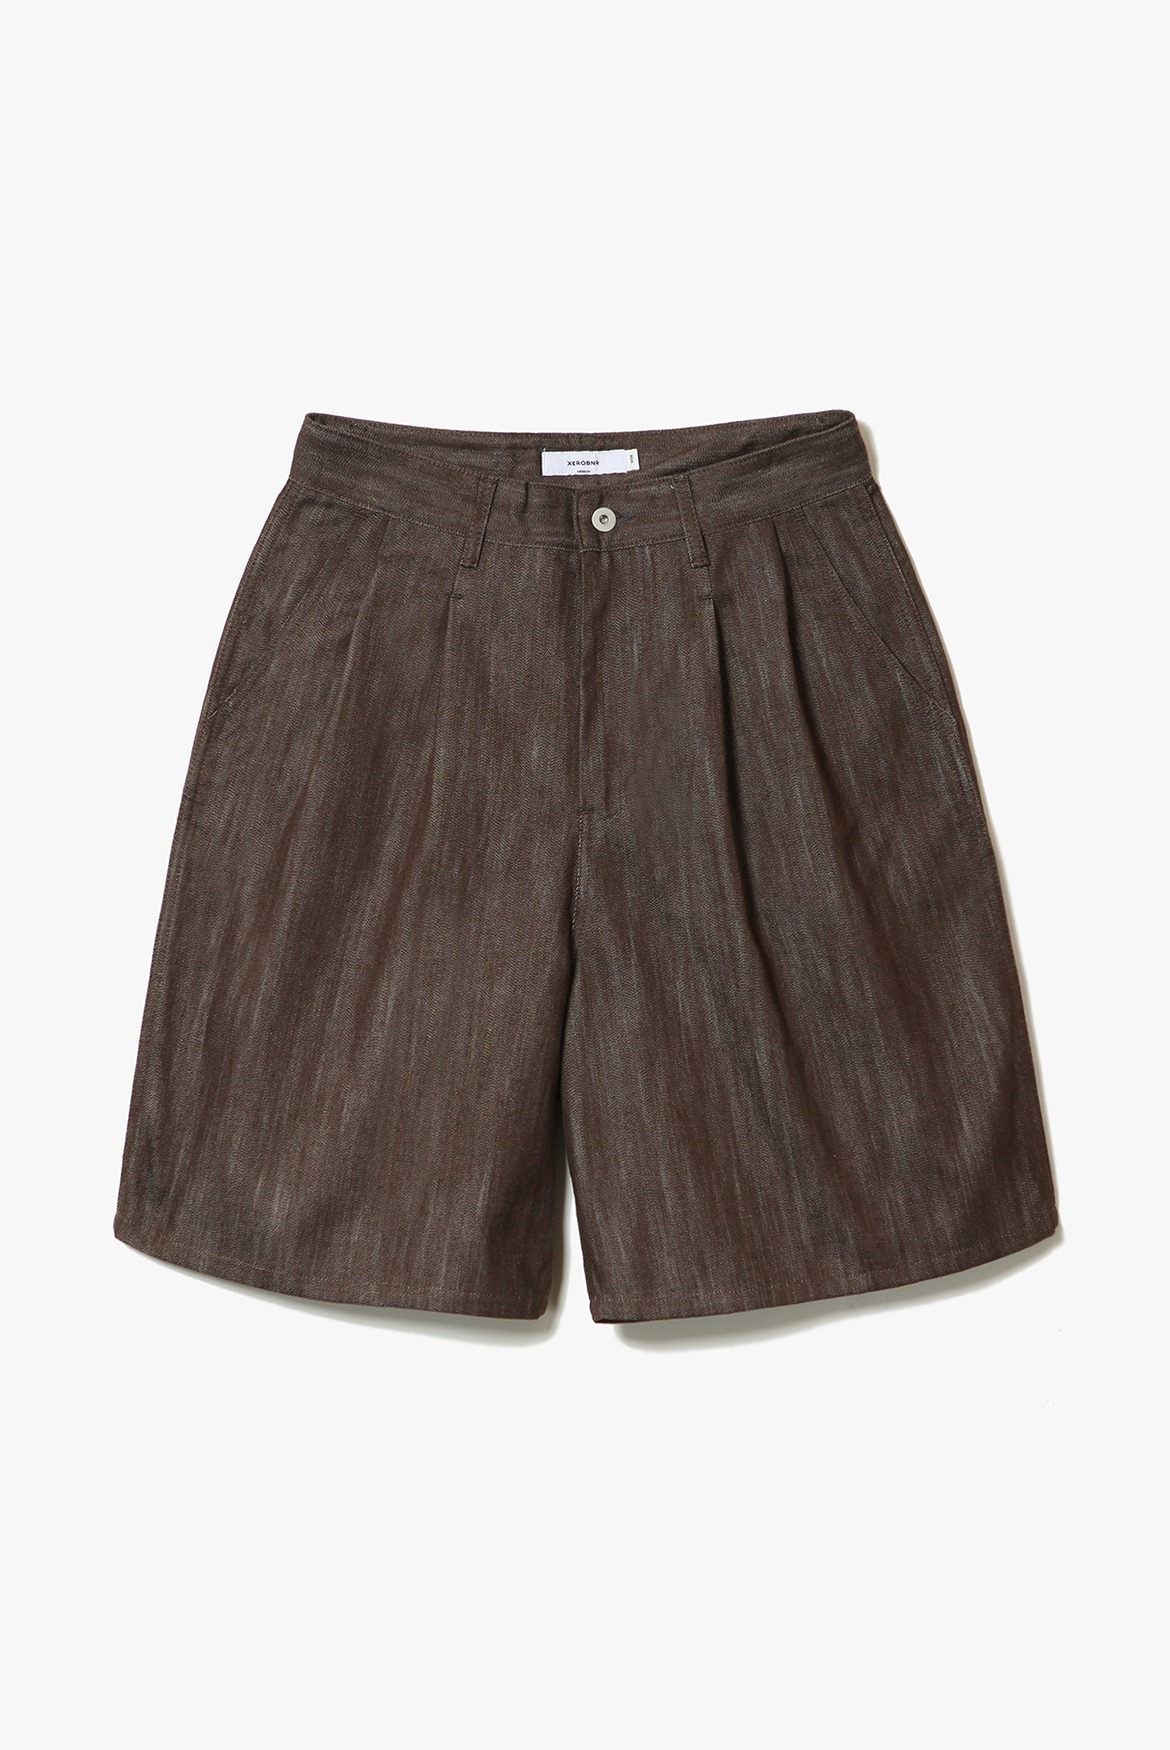 Clean Denim Bermuda Two Tuck Shorts [Brown]